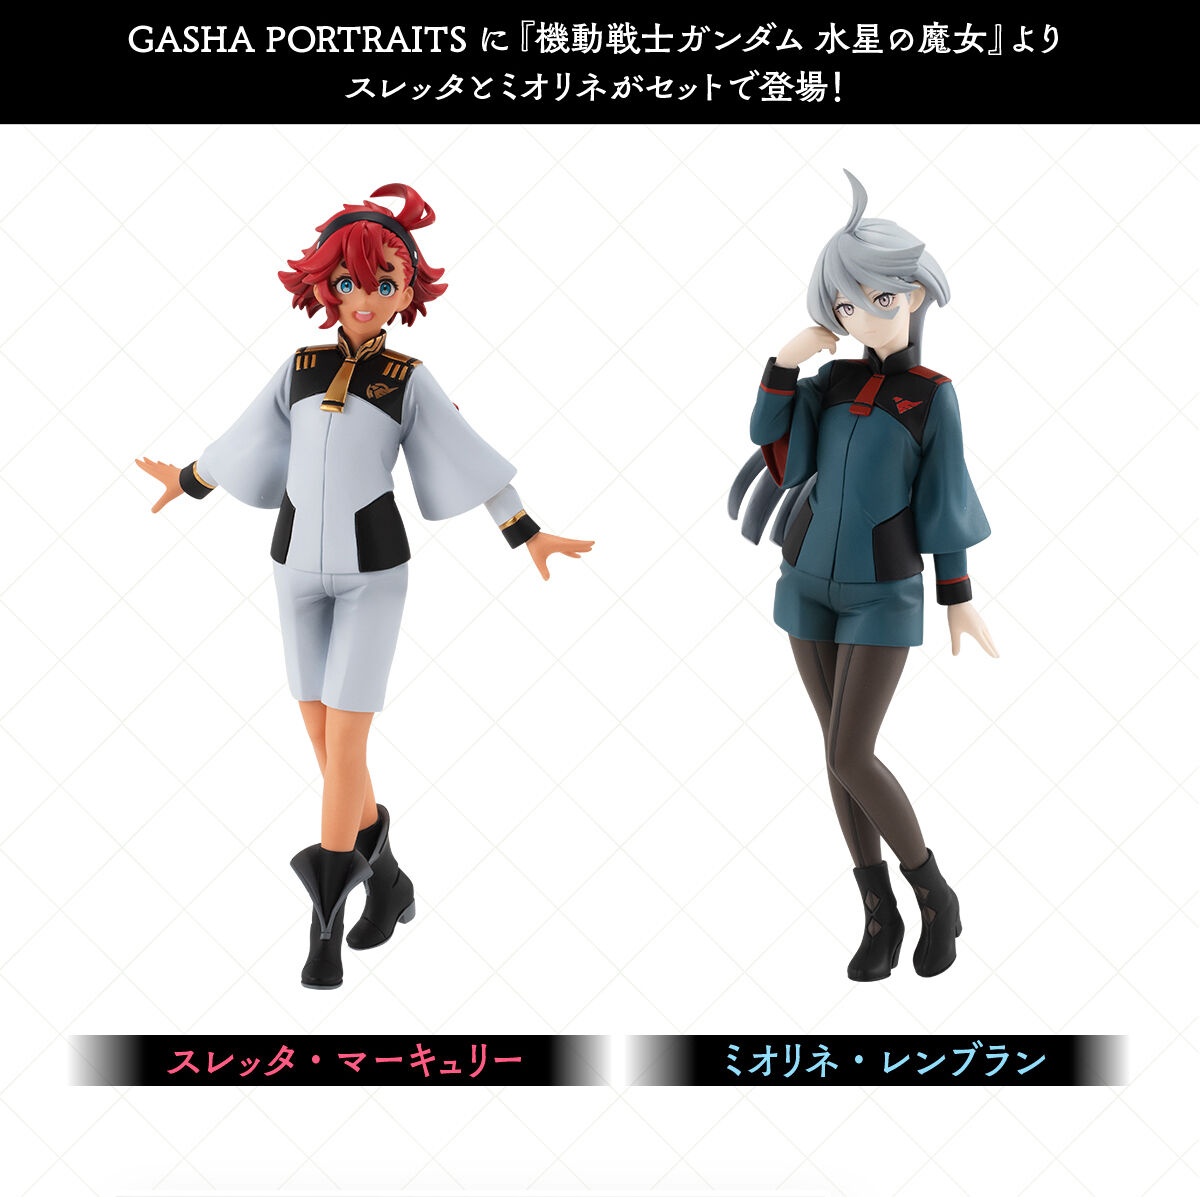 Gasha Portraits-Suletta Mercury + Miorine Rembran(Mobile Suit Gundam : The Witch from Mercury)